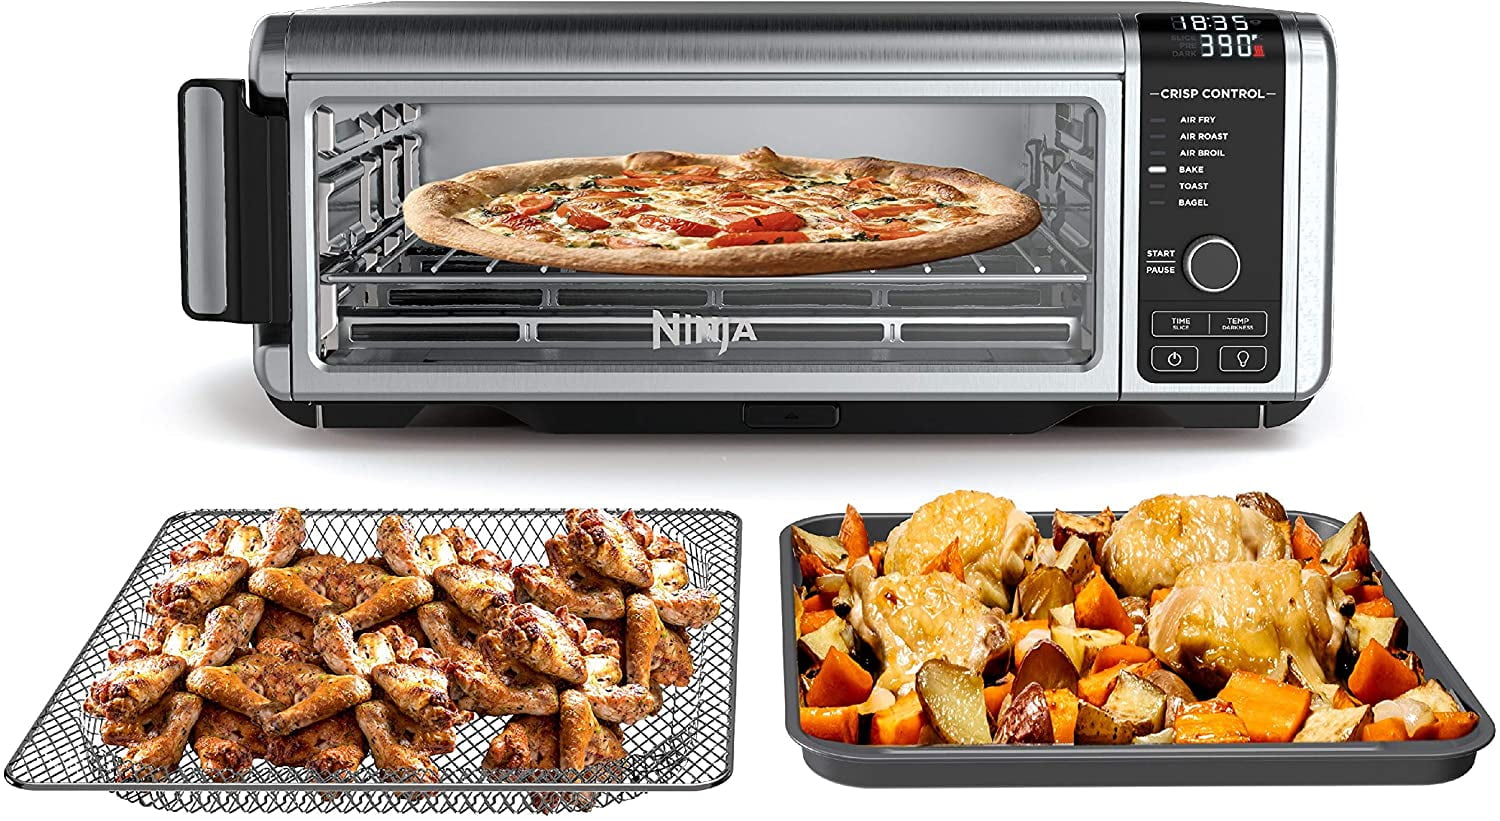 Ninja SP301 Foodi 1800 Watt Dual Heat Air Fry Oven for Sale in San  Fernando, CA - OfferUp